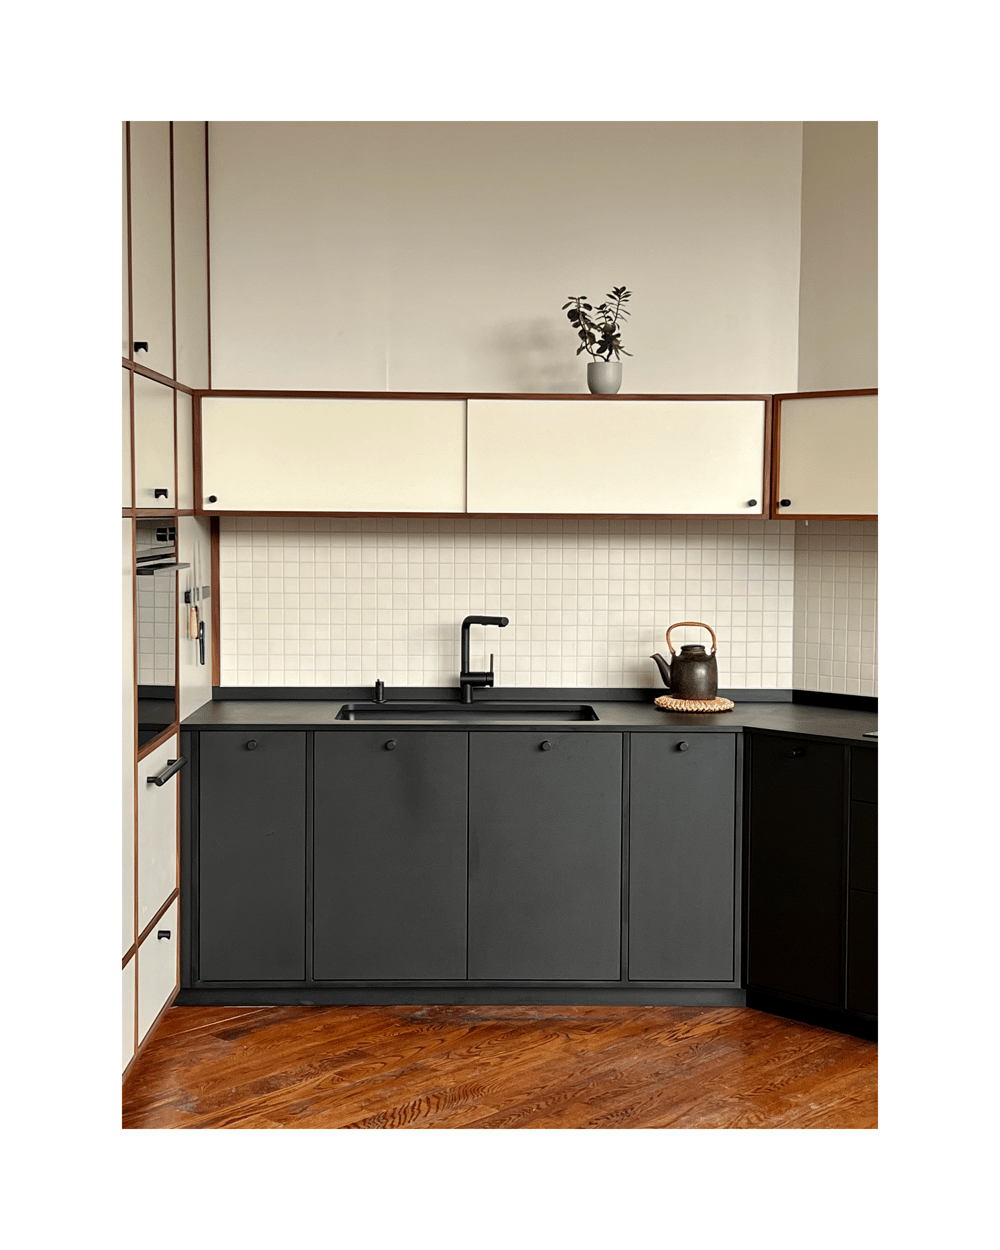 Max Wang's Richlite Kitchen Counters & Cabinets